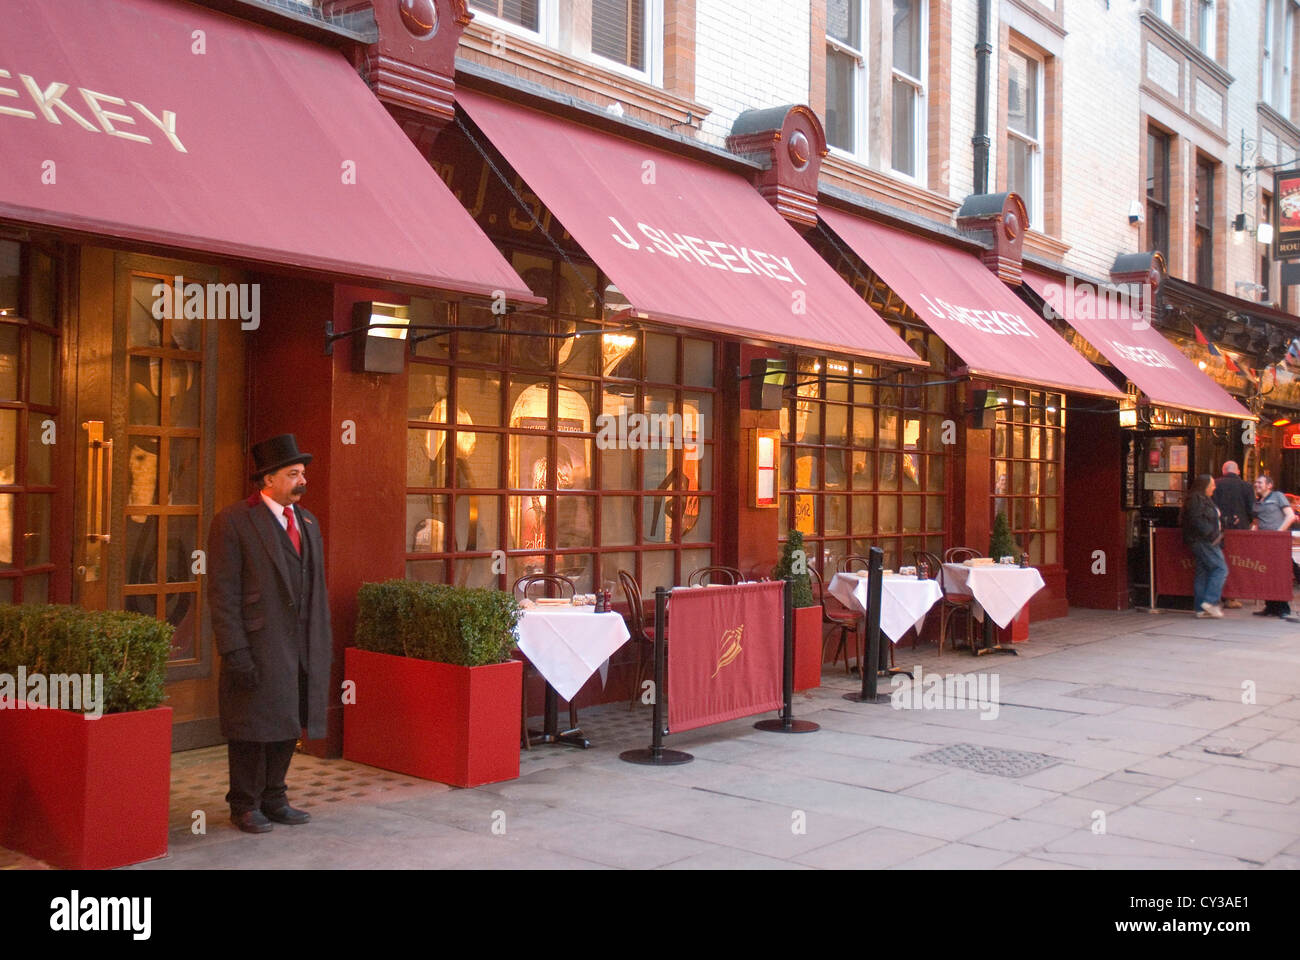 UK. London. Leicester Square. J Sheekey restaurant Stock Photo